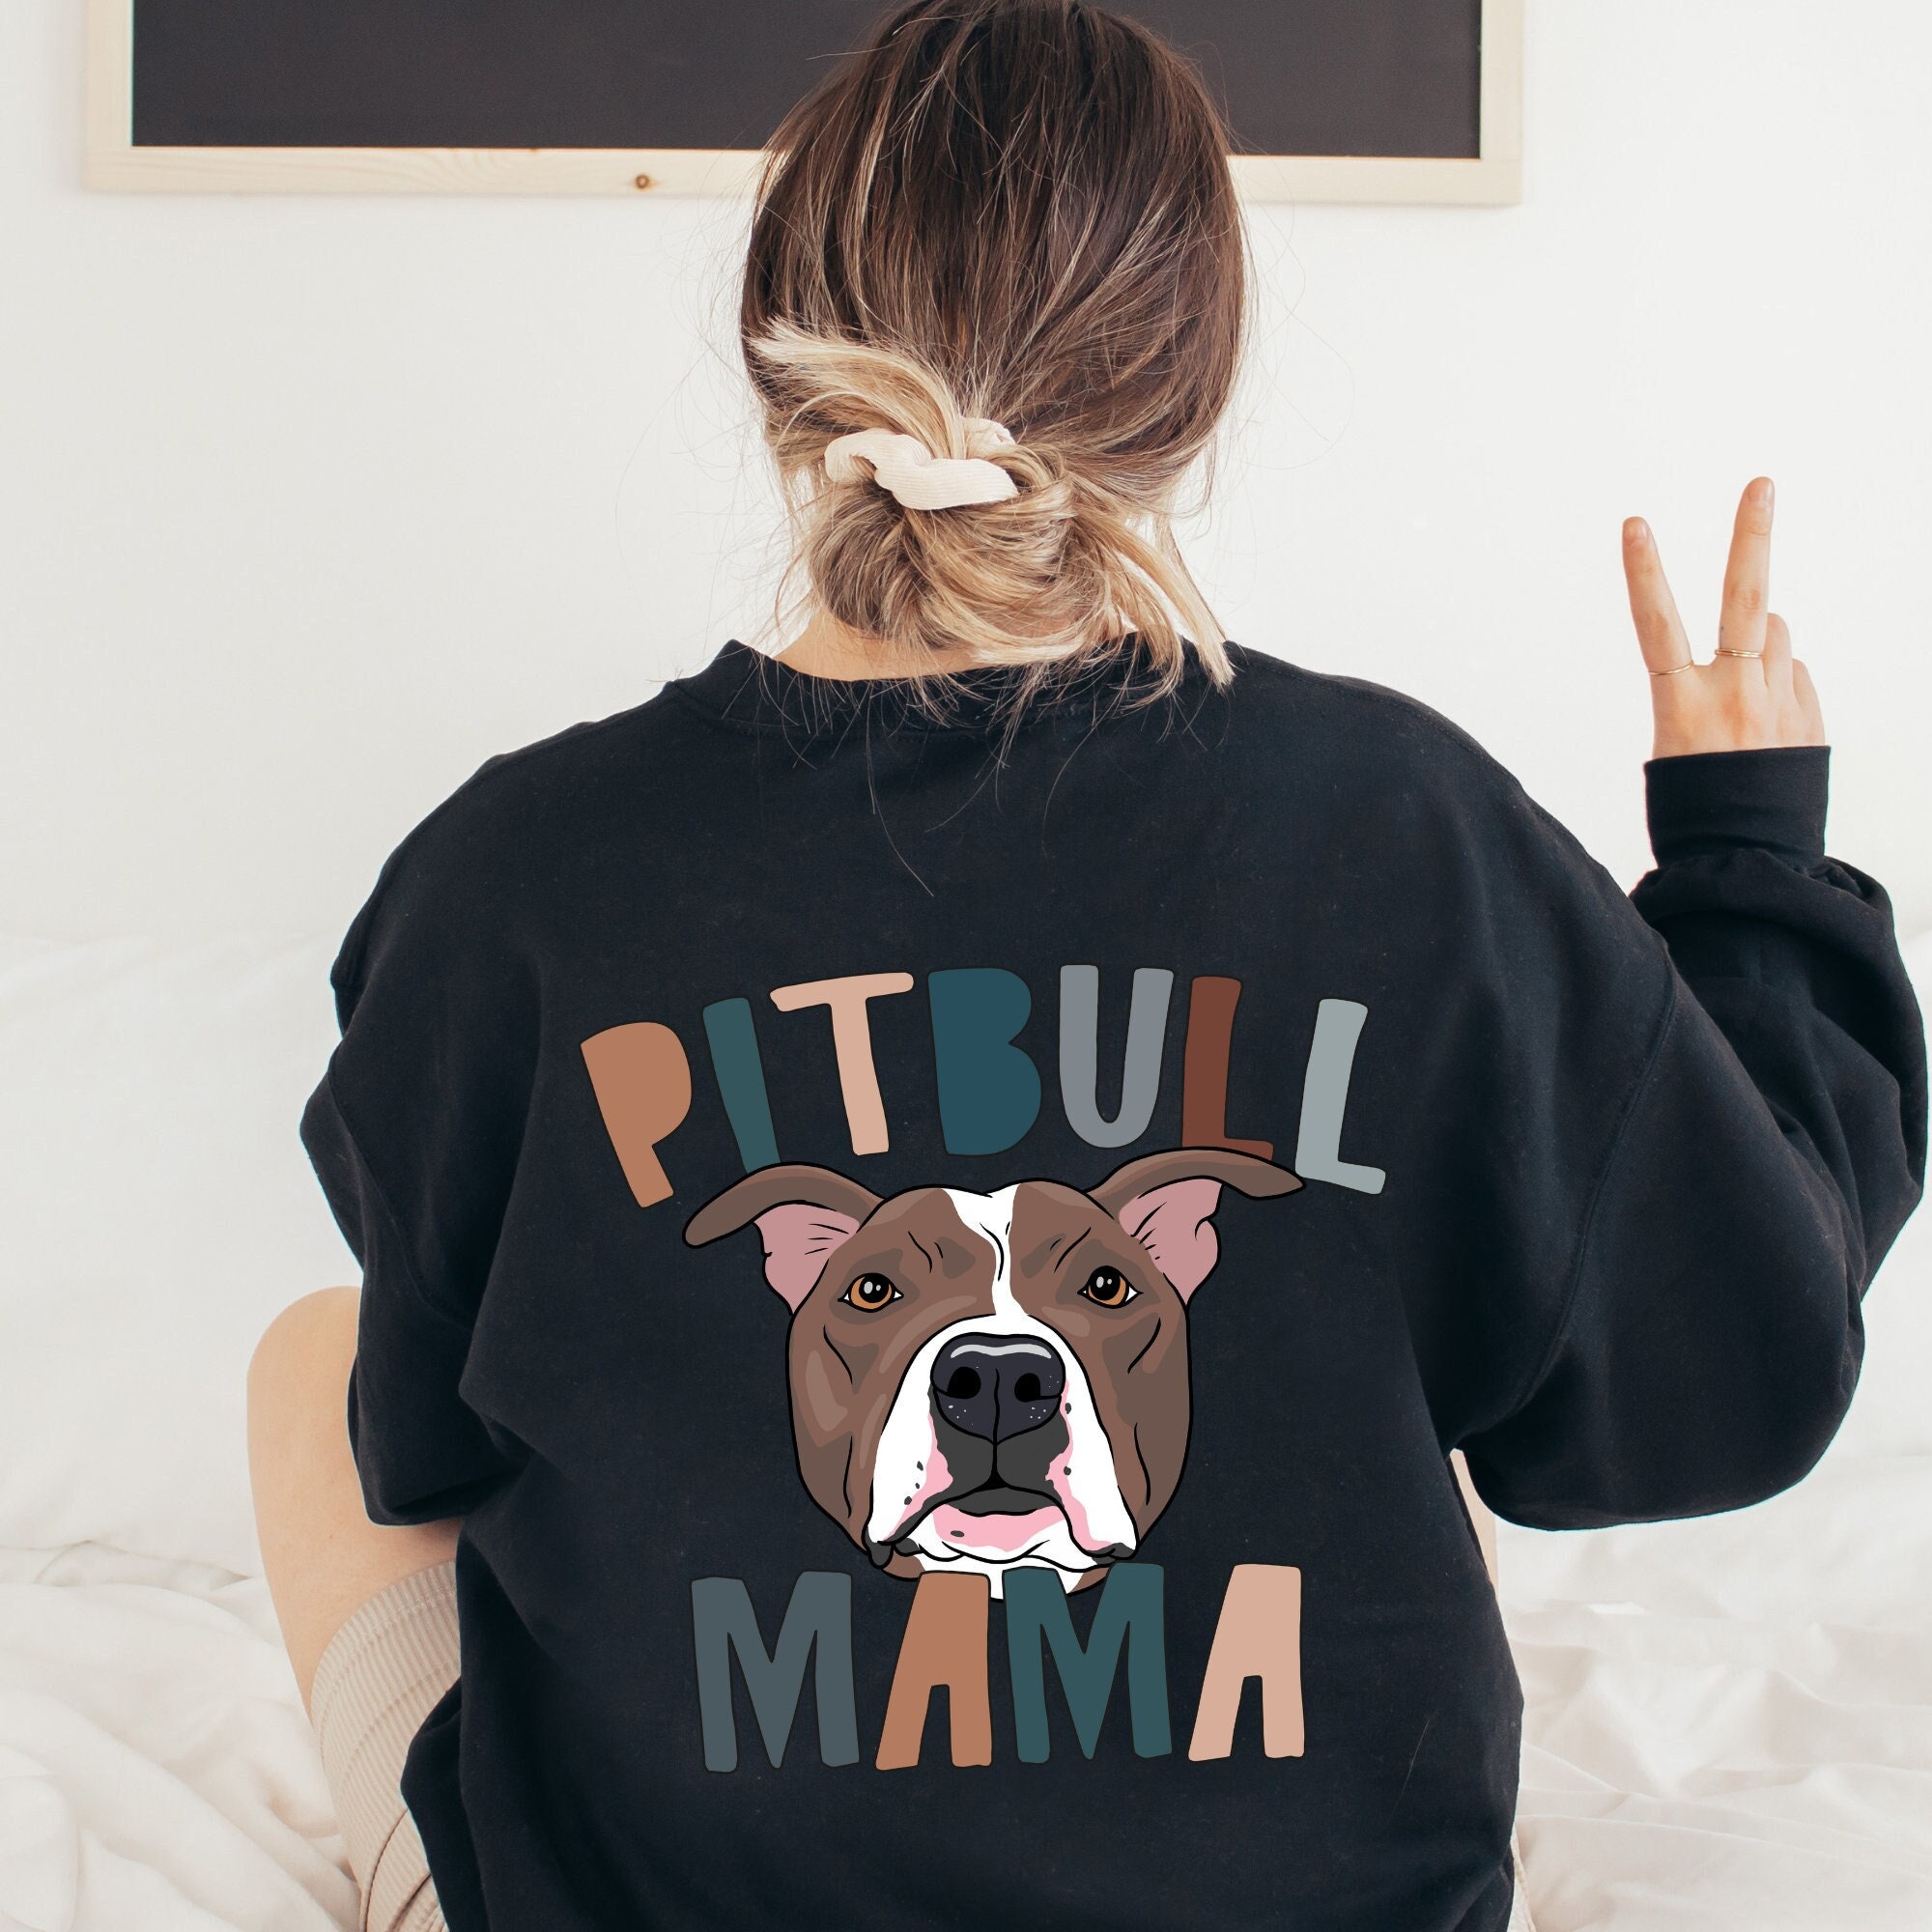 Pitbull dad T Shirts, Hoodies, Sweatshirts & Merch